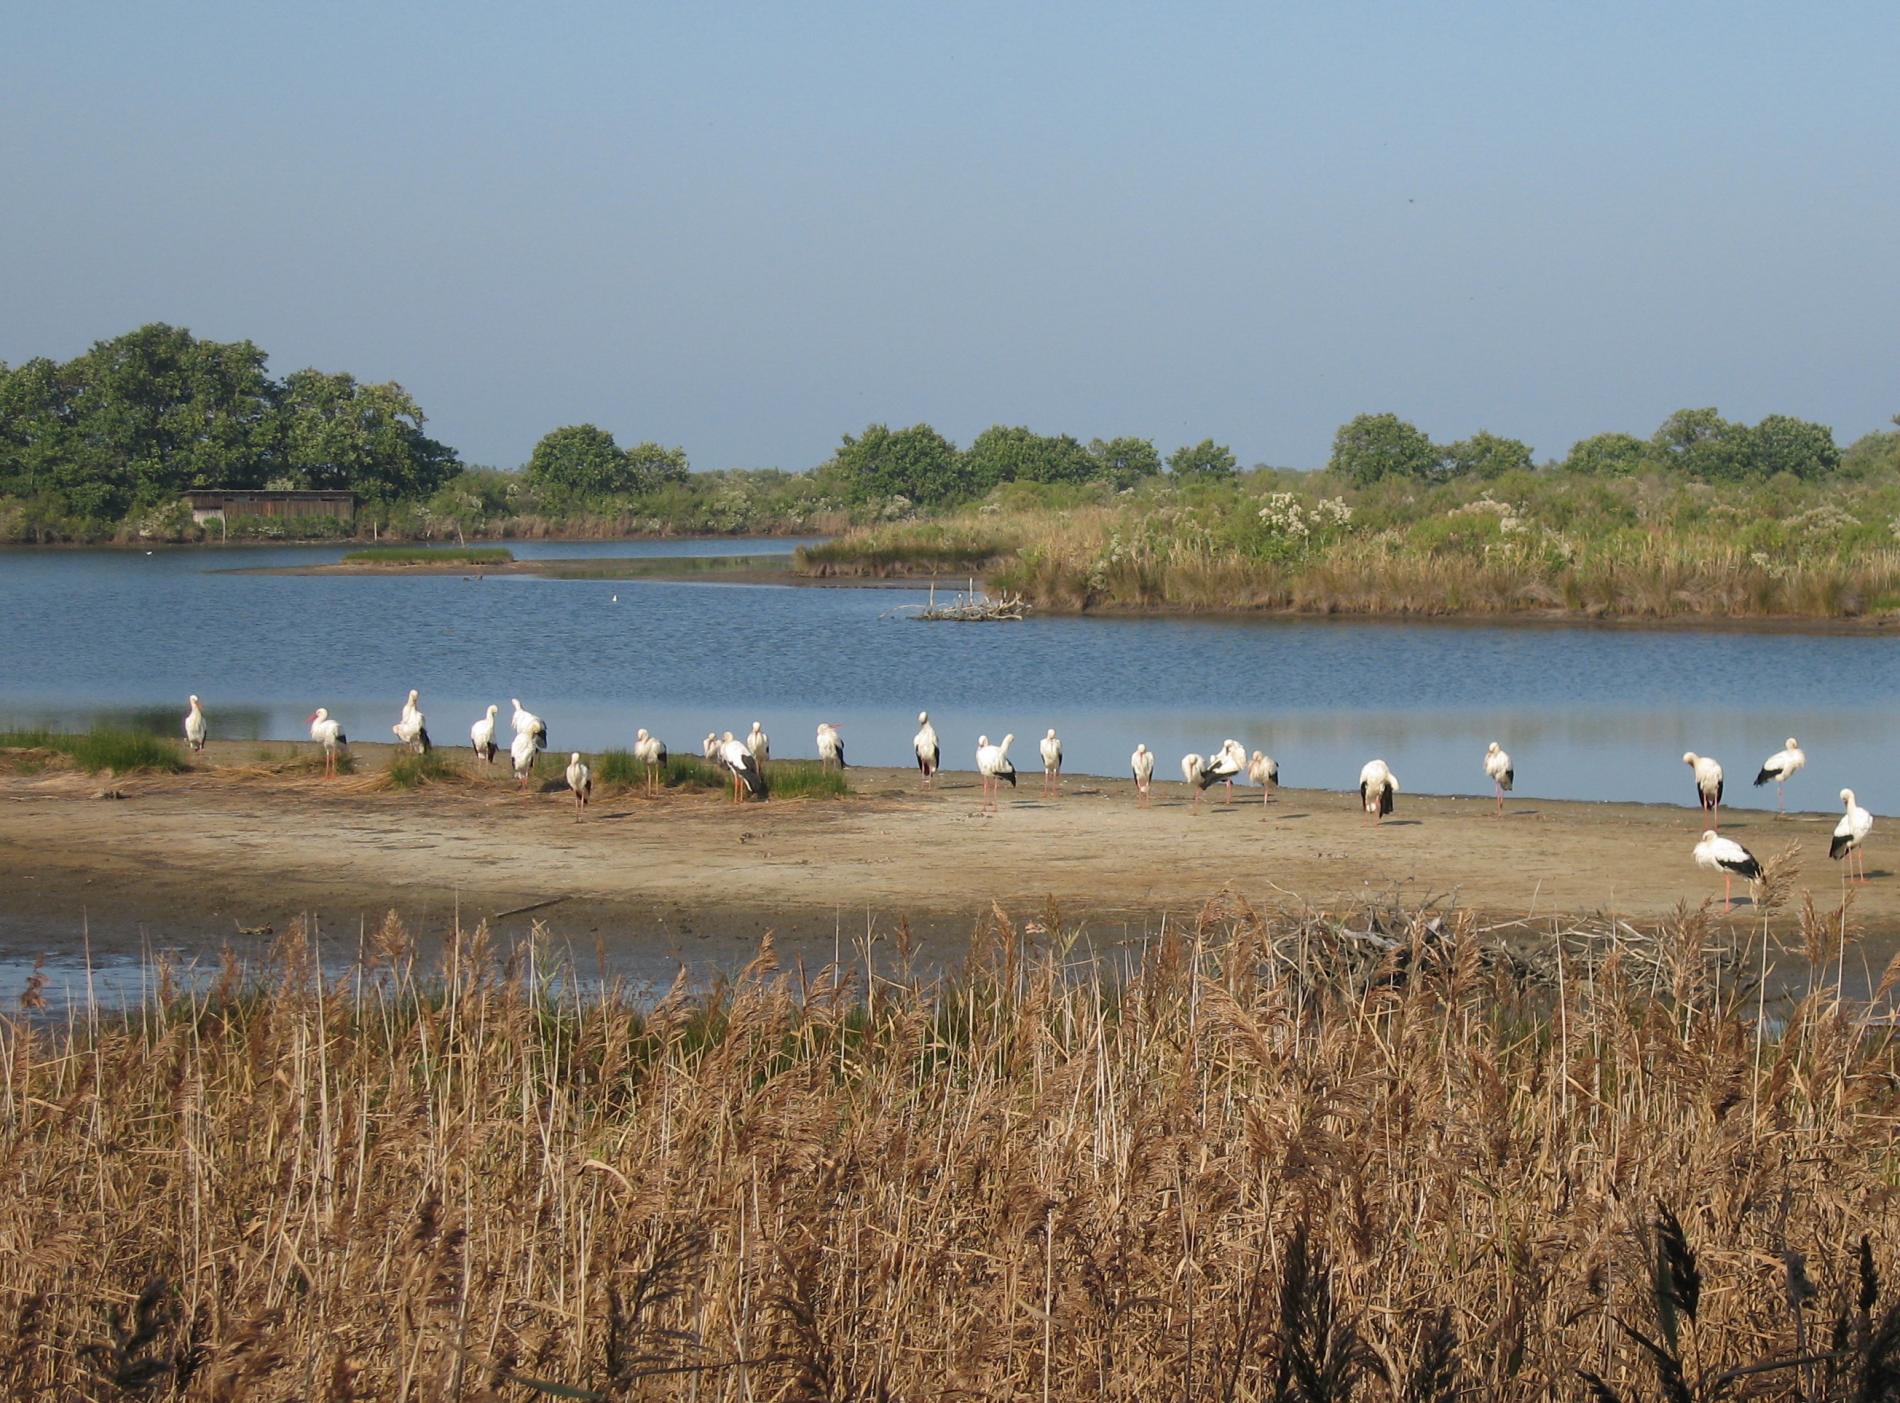 The ornithological park of Teich